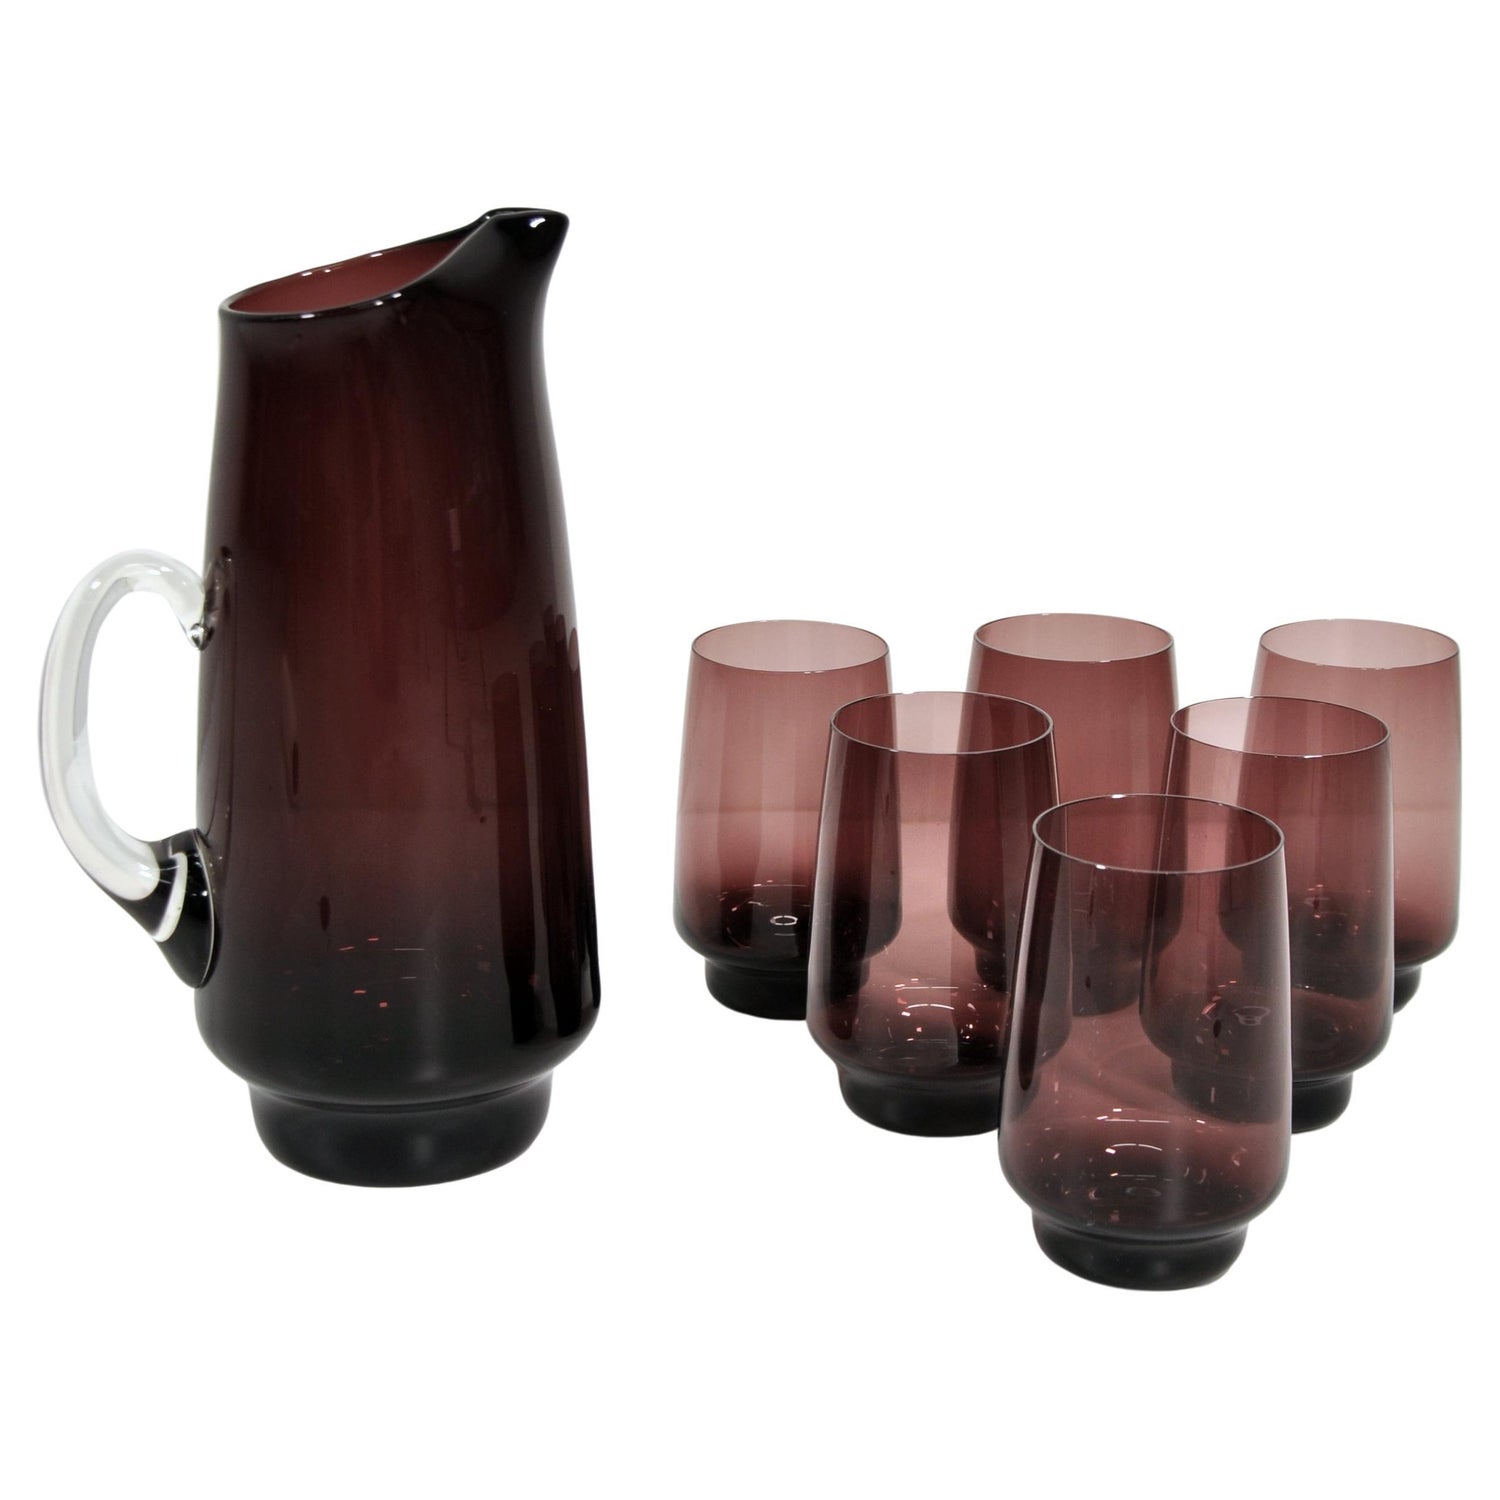 https://a.1stdibscdn.com/vintage-amethyst-glass-pitcher-and-six-glasses-for-sale/f_19583/f_340778821682972535134/f_34077882_1682972535897_bg_processed.jpg?width=1500